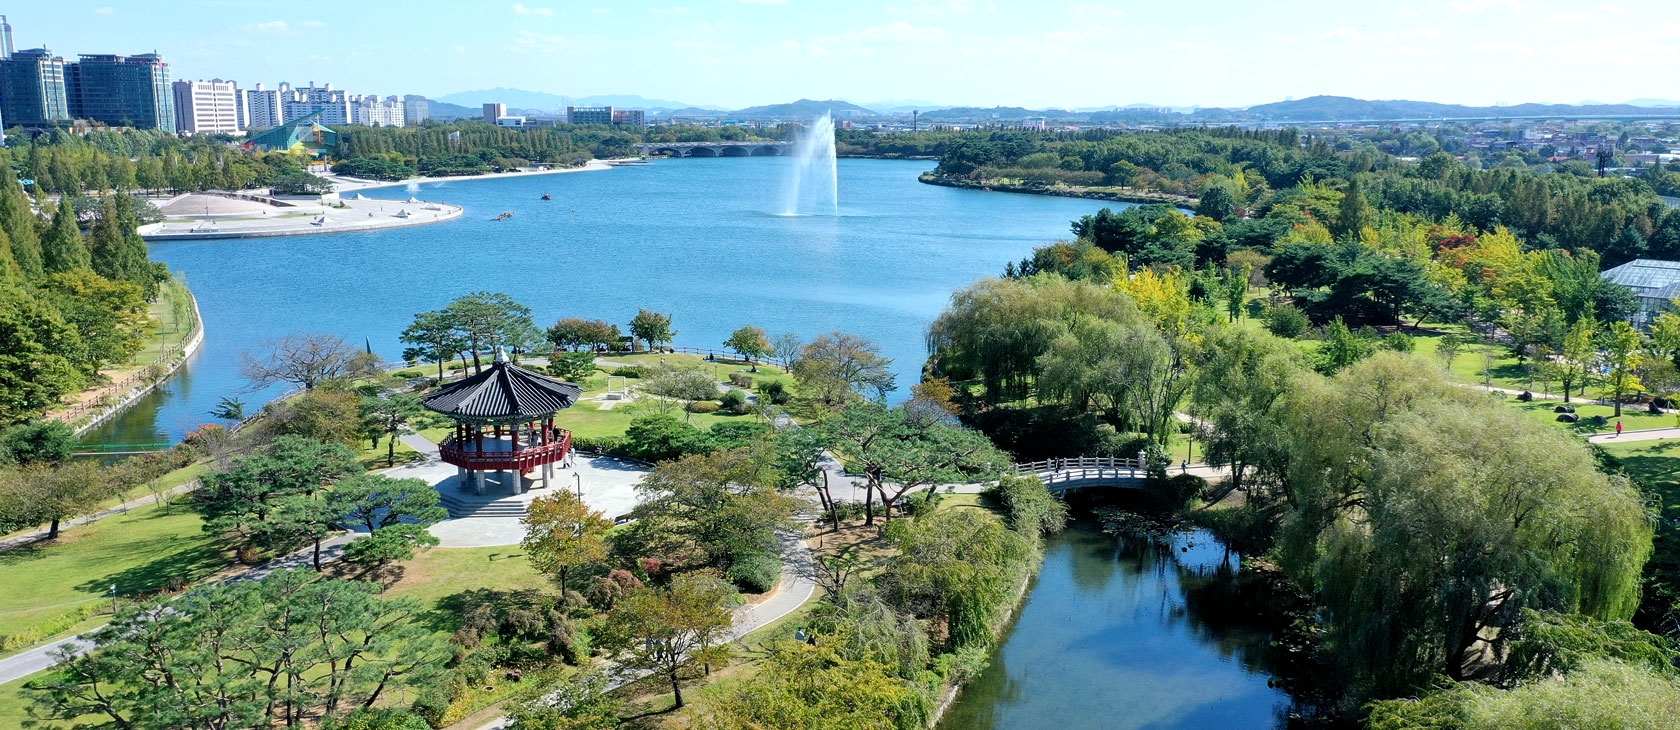 Ilsan Lake Park image2